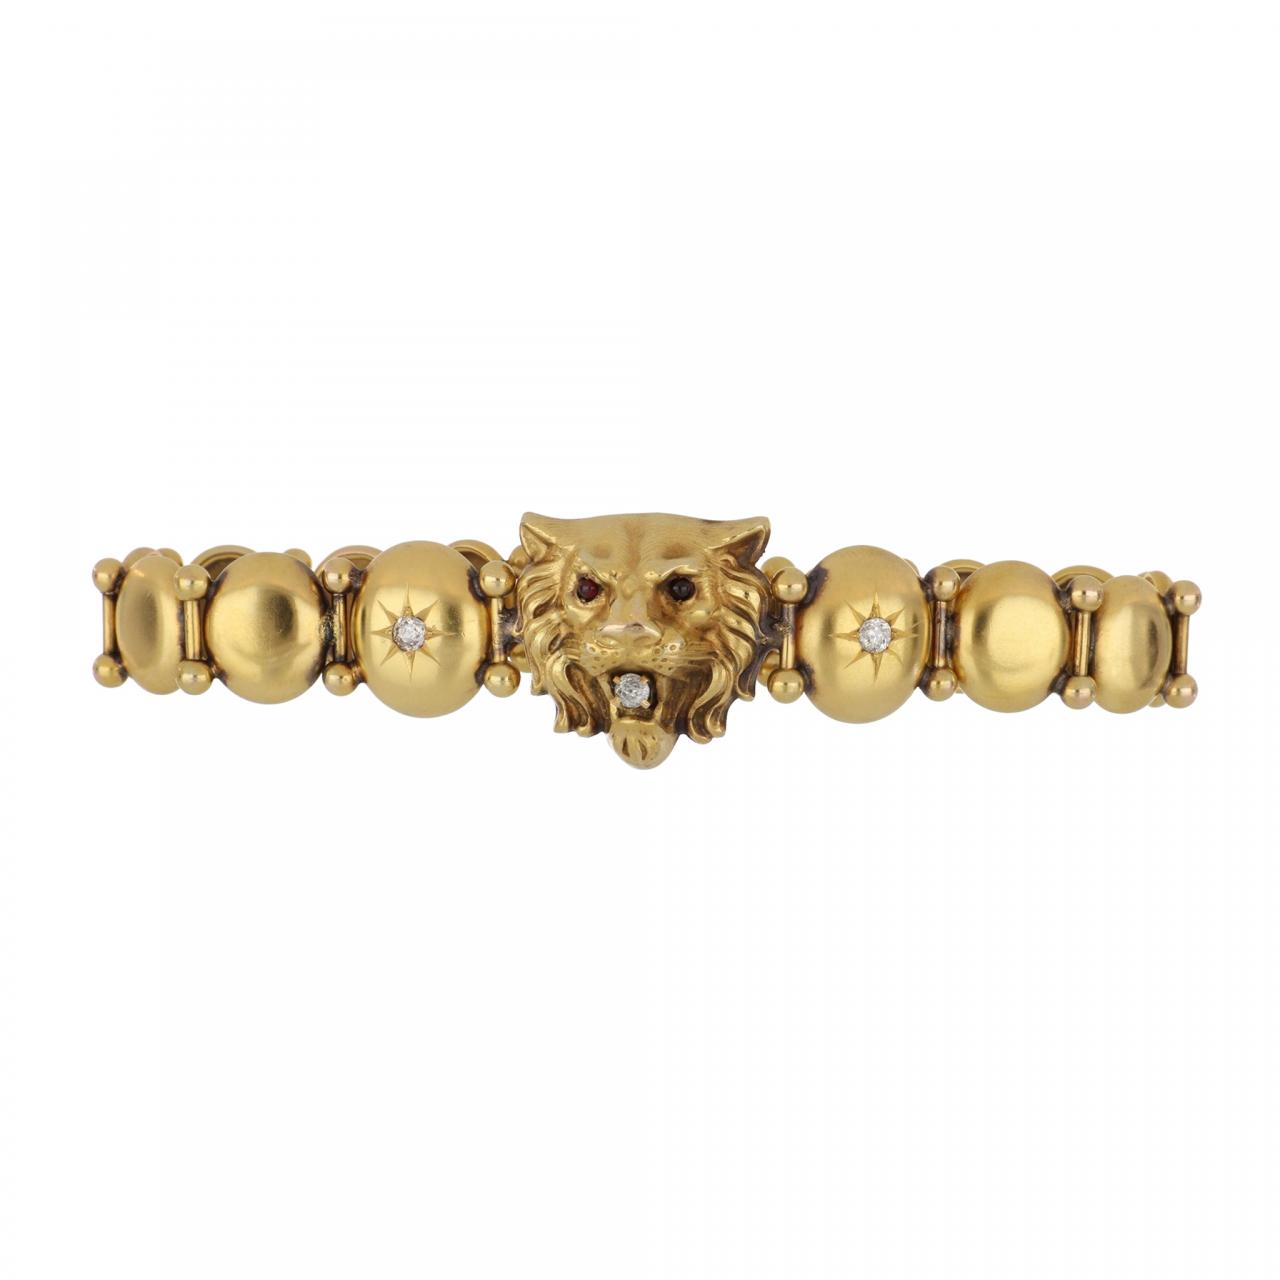 5 Line Rudraksha Cool Design Gold Plated Lion Face Bracelet With Diamonds -  Style A085, Rudraksh Bracelet, रुद्राक्ष ब्रेसलेट - Soni Fashion, Rajkot |  ID: 24683724133